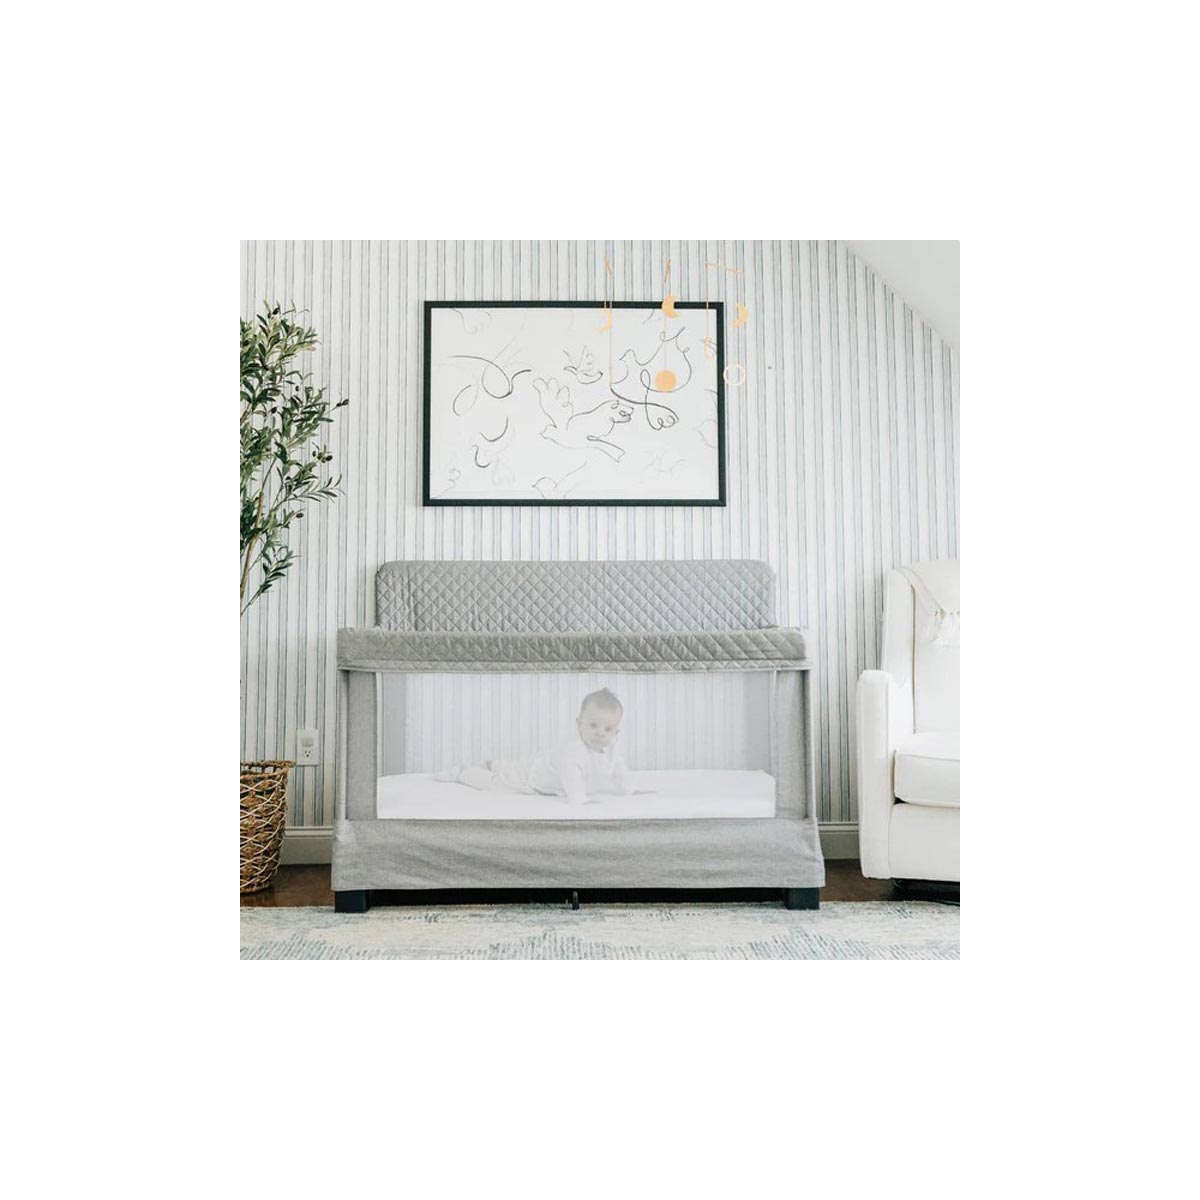 Baby Delight Horizon Full Size Breathable Crib, 819956001692 - ANB Baby